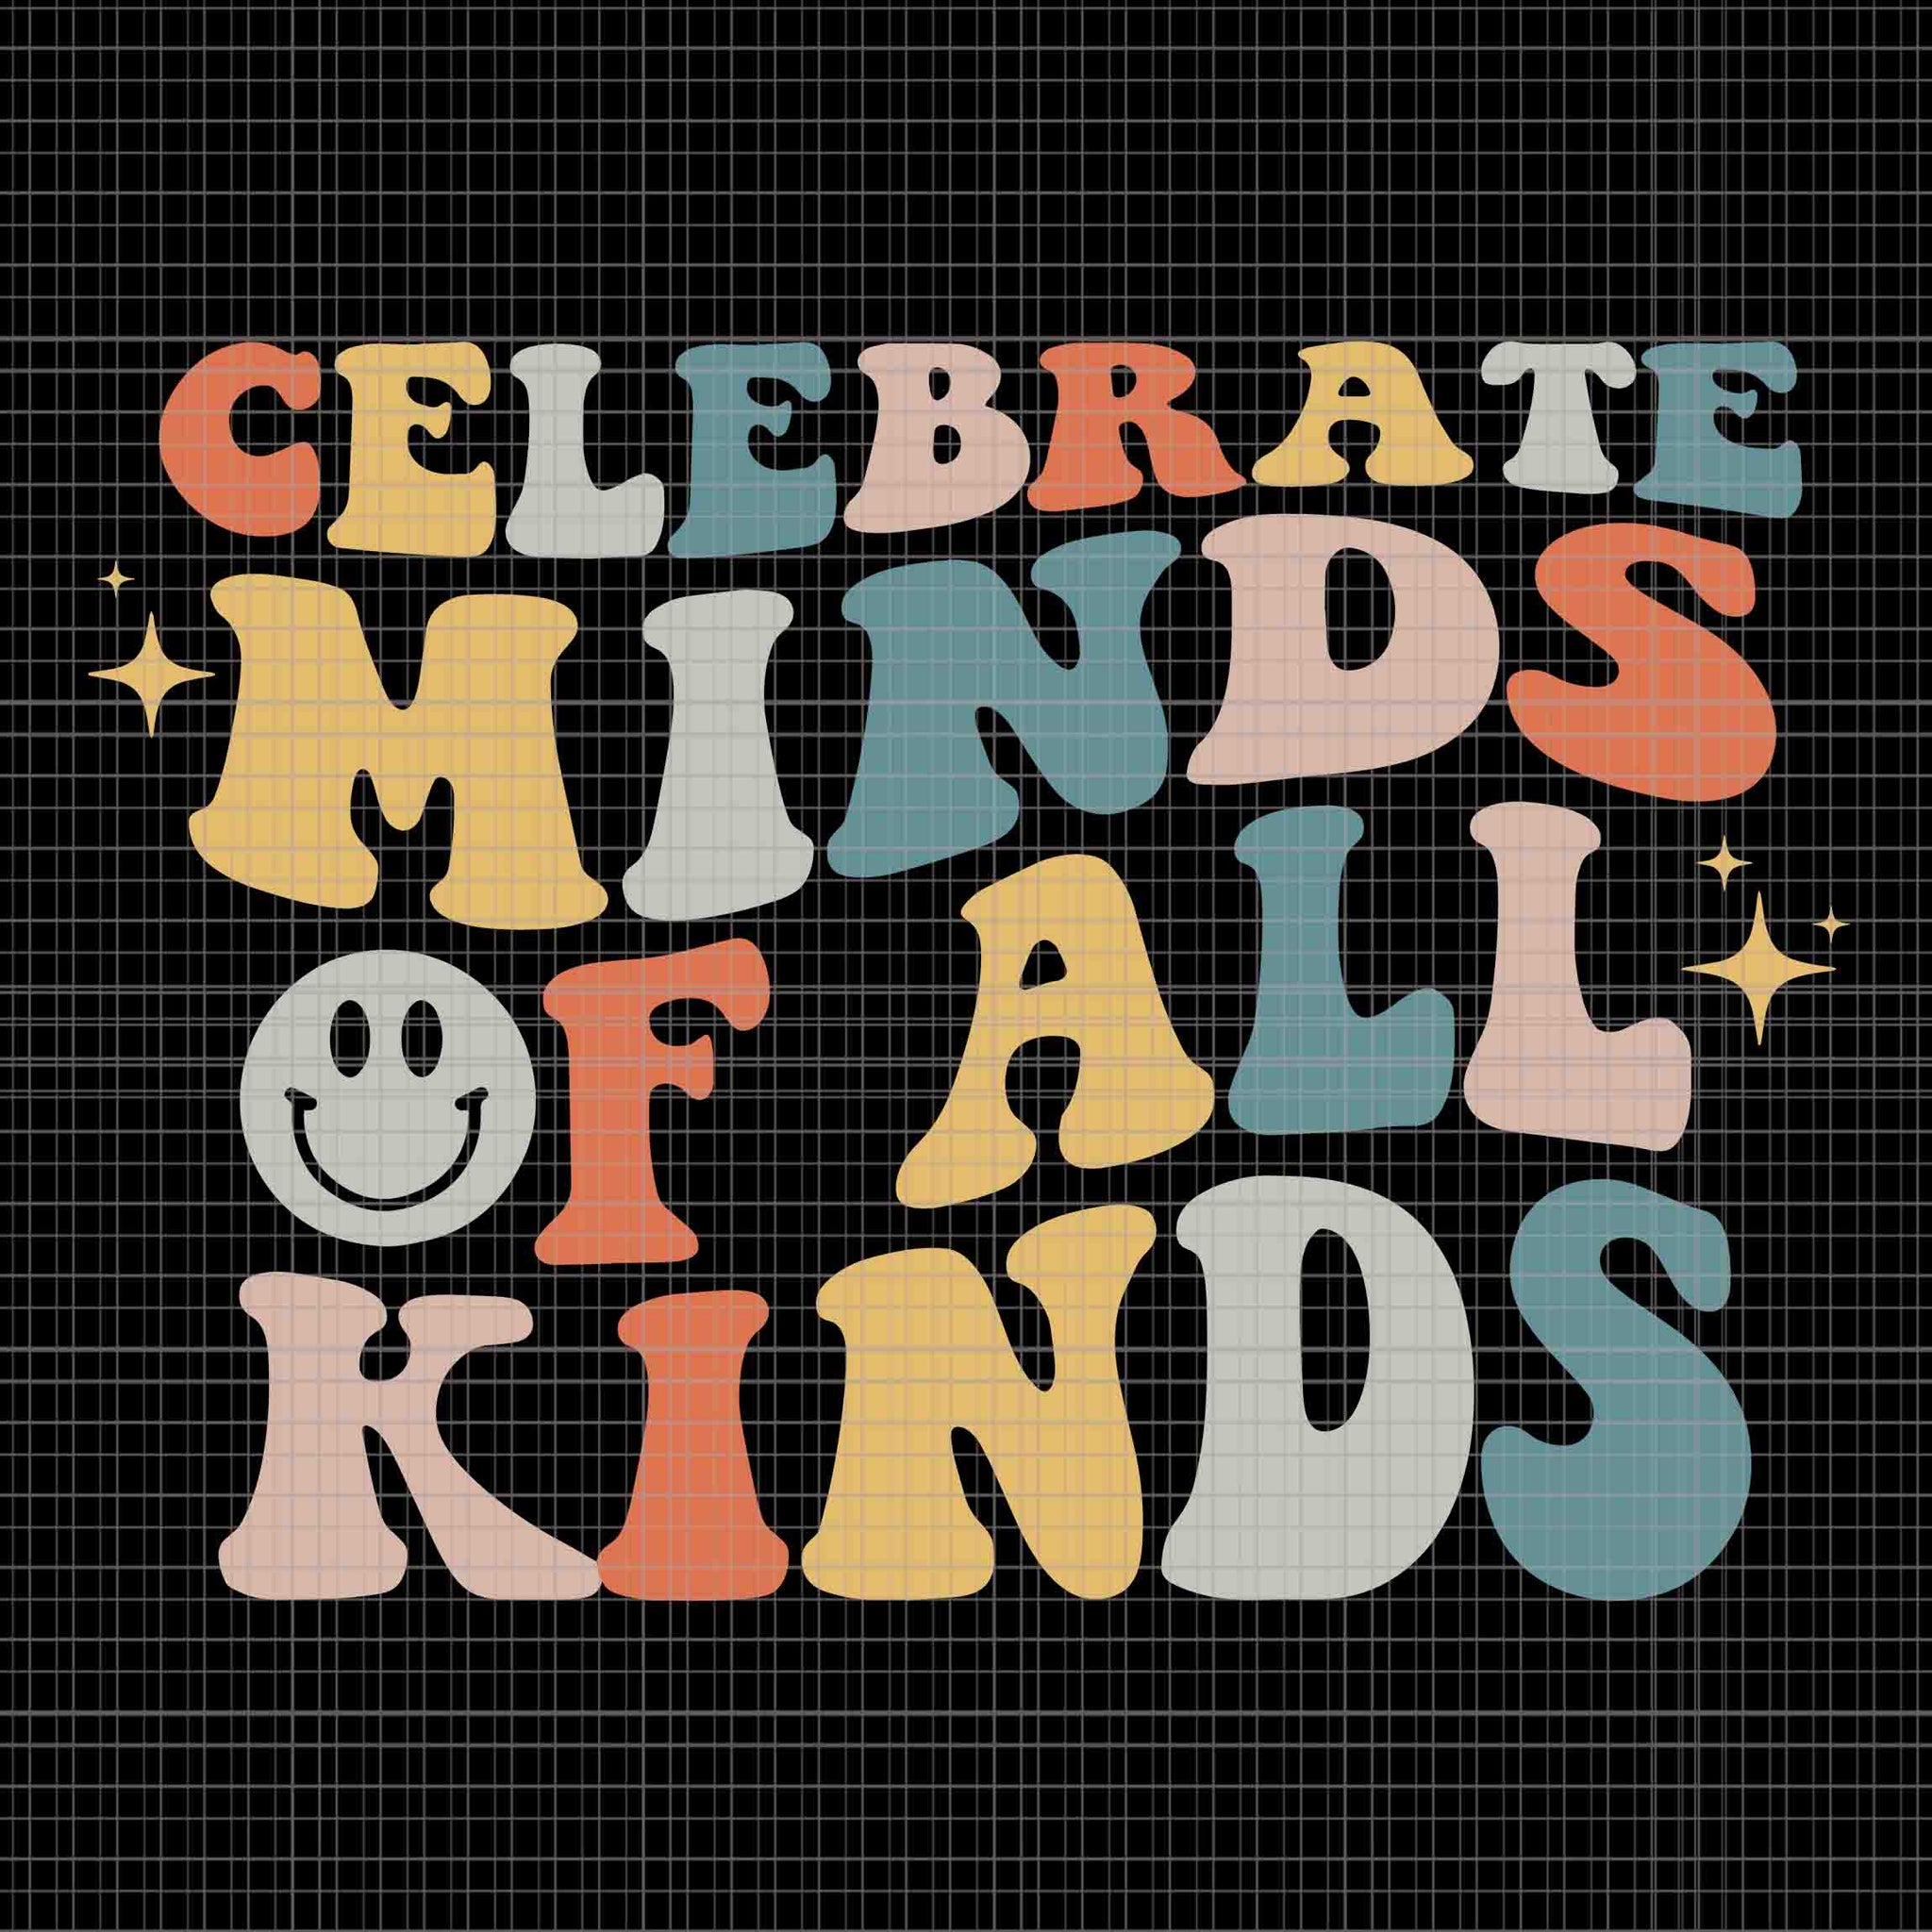 Celebrate Minds Of All Kinds Neurodiversity Autism Awareness Svg, Celebrate Minds Of All Kinds Svg, Funny Quote Svg